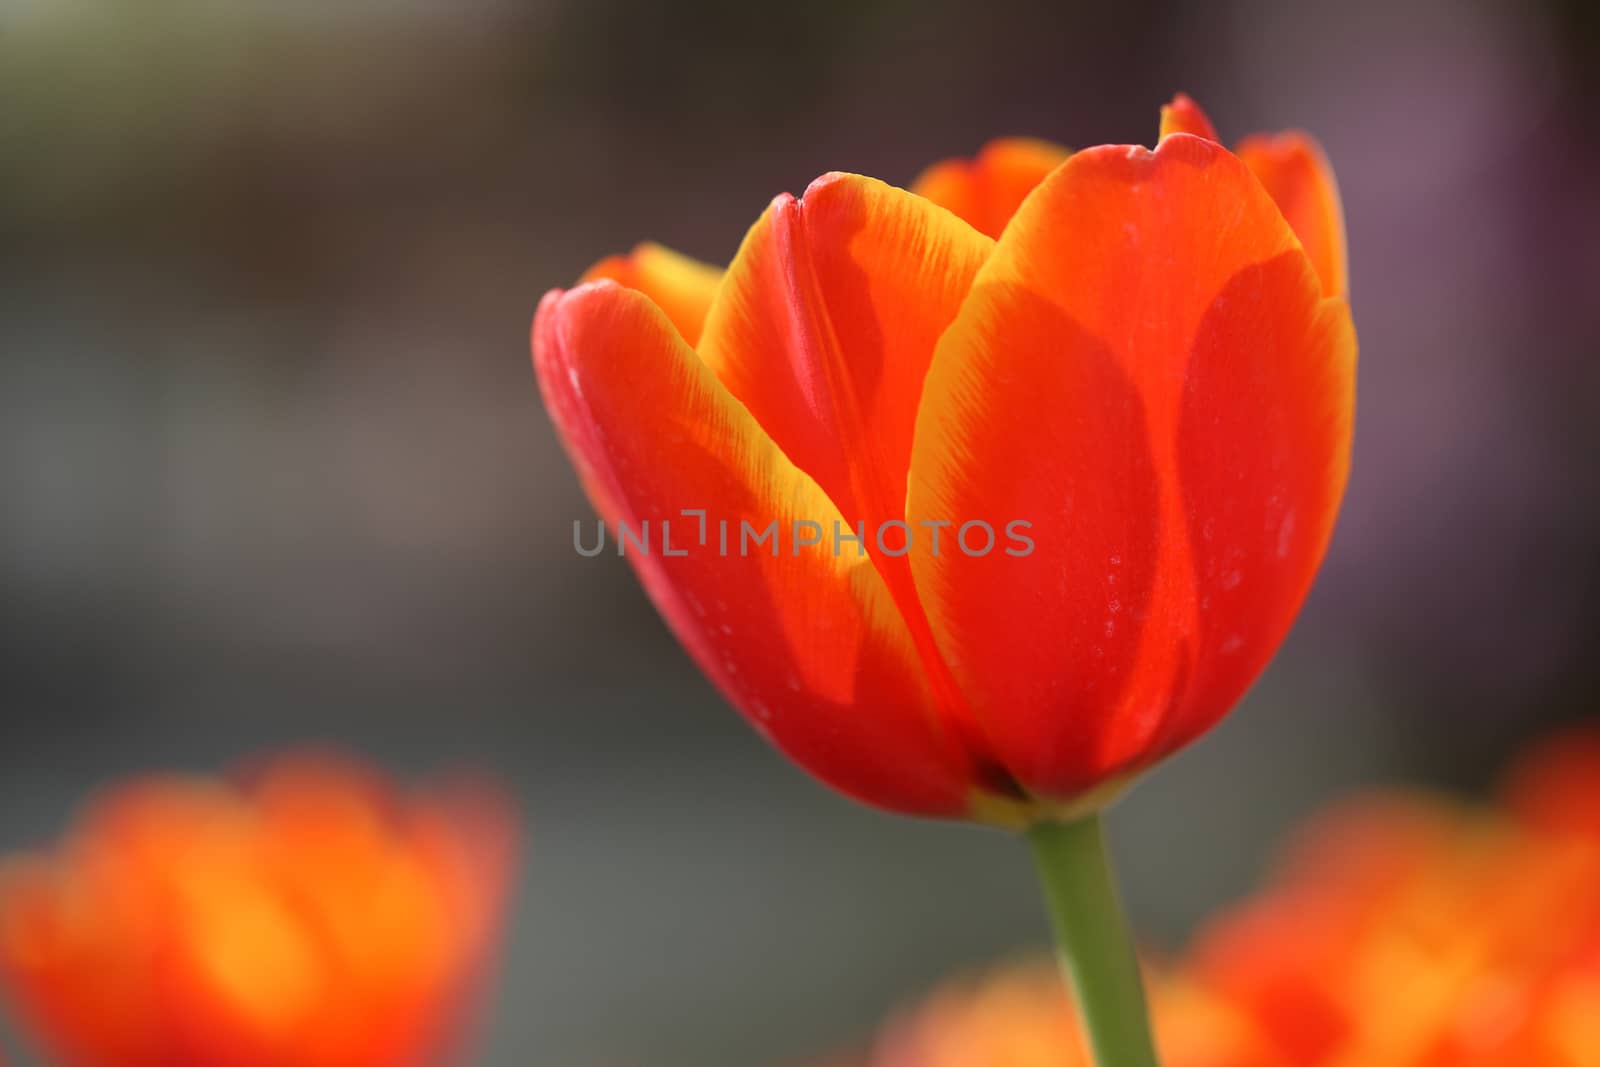 Red Orange Yellow Tulips  by piyato